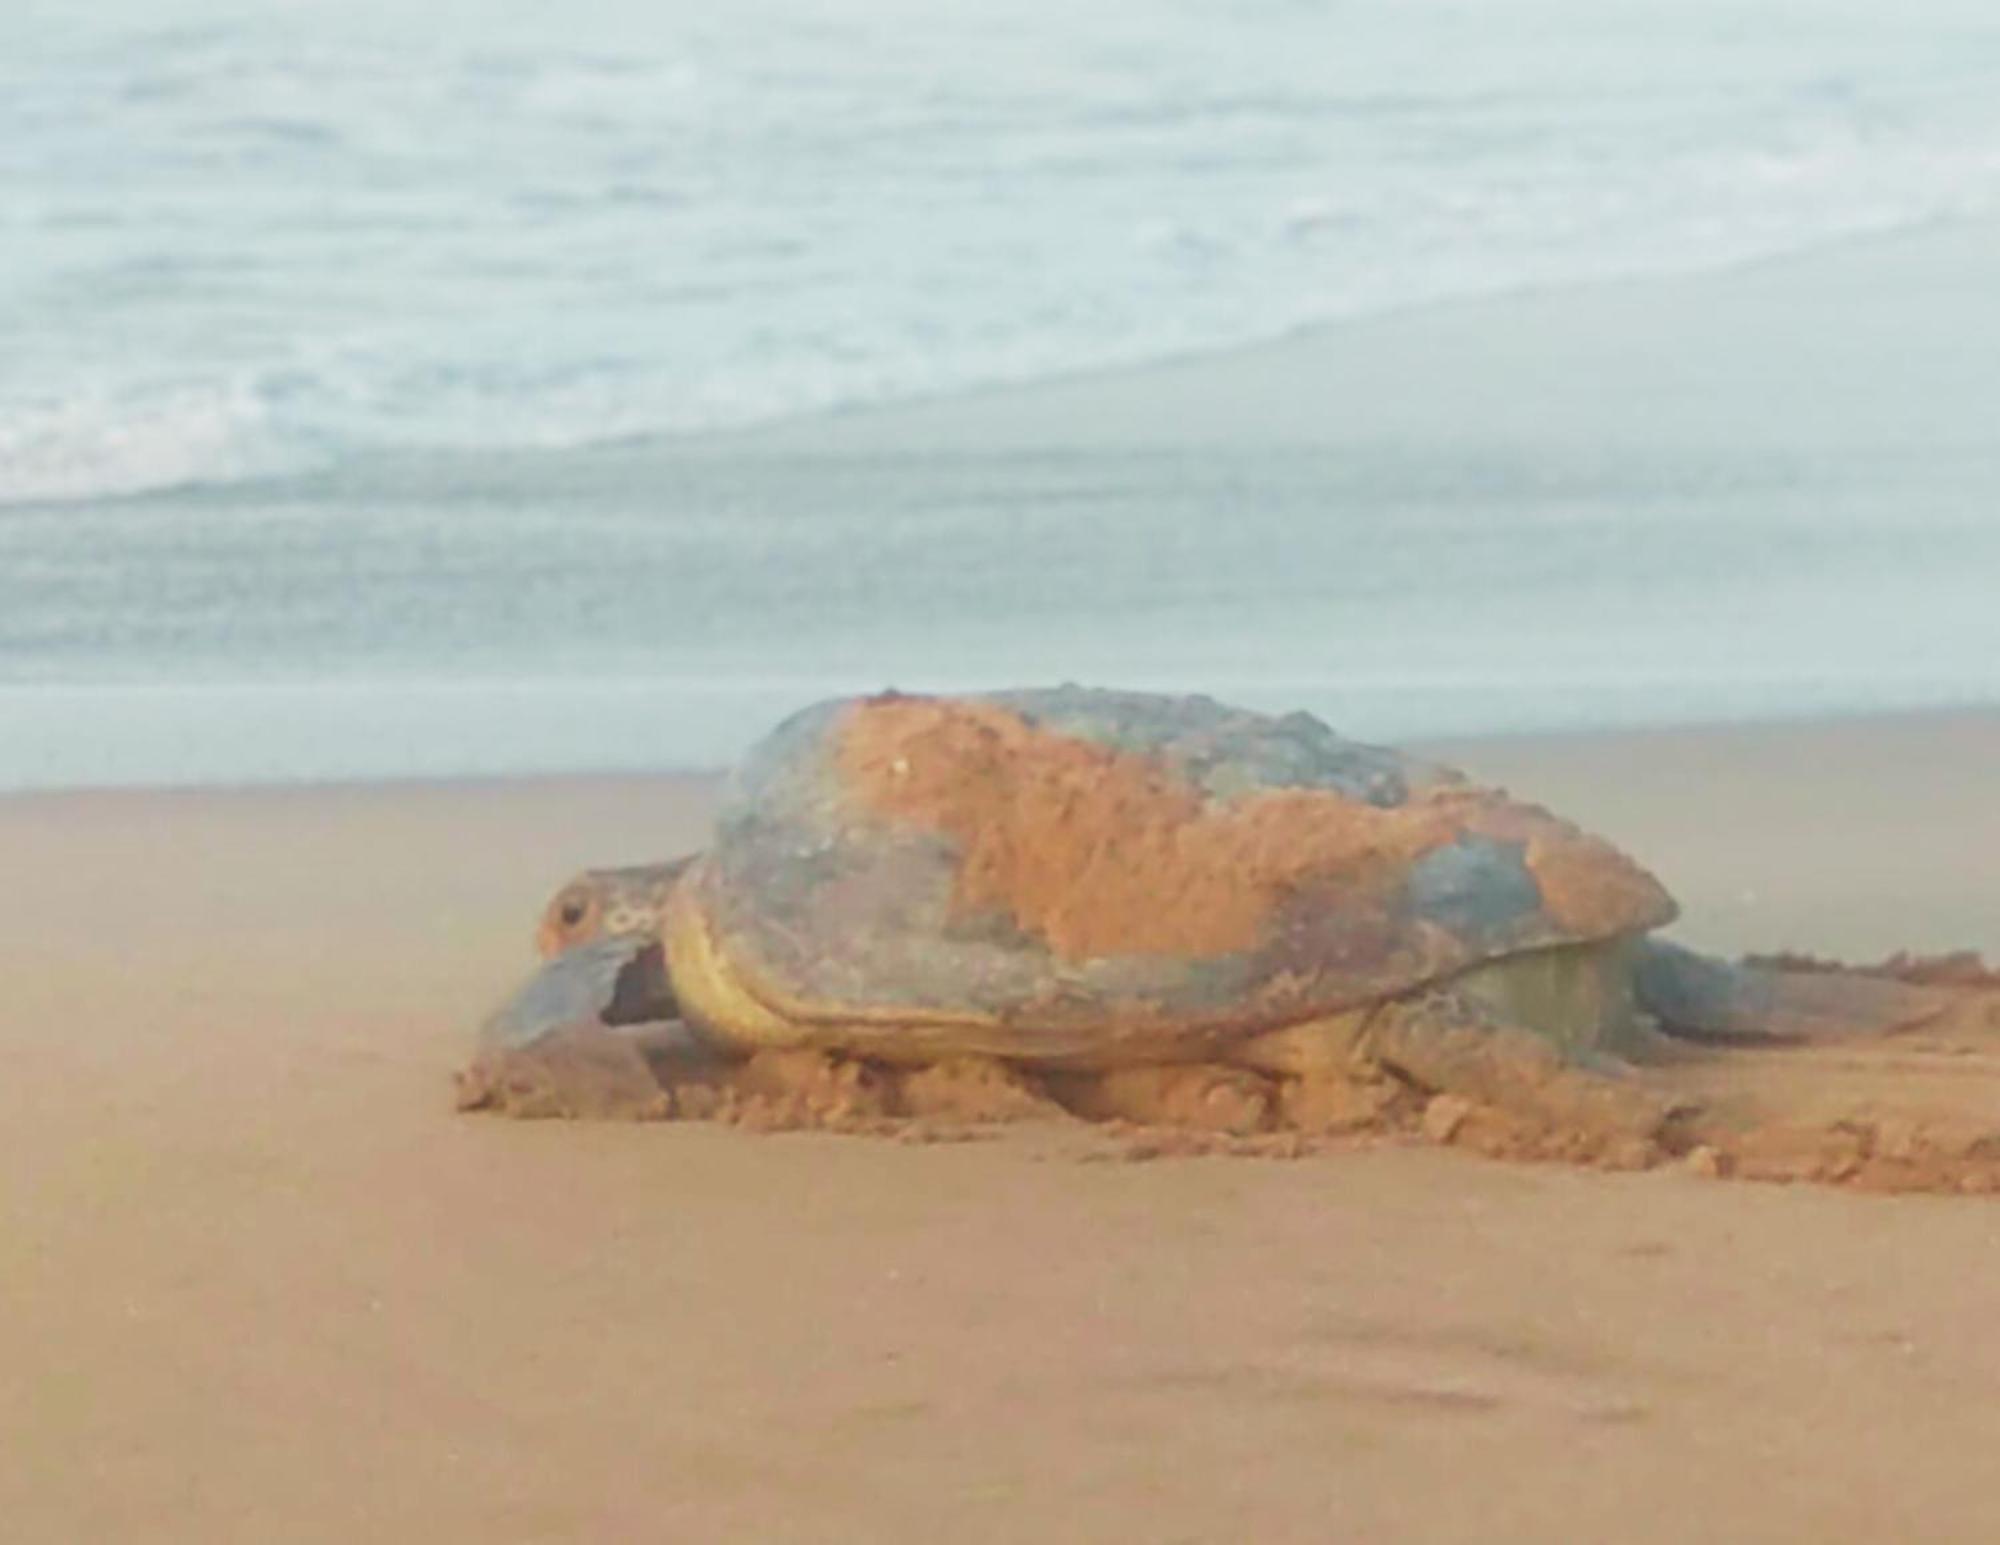 Amour At Turtle Beach 坦加拉 外观 照片